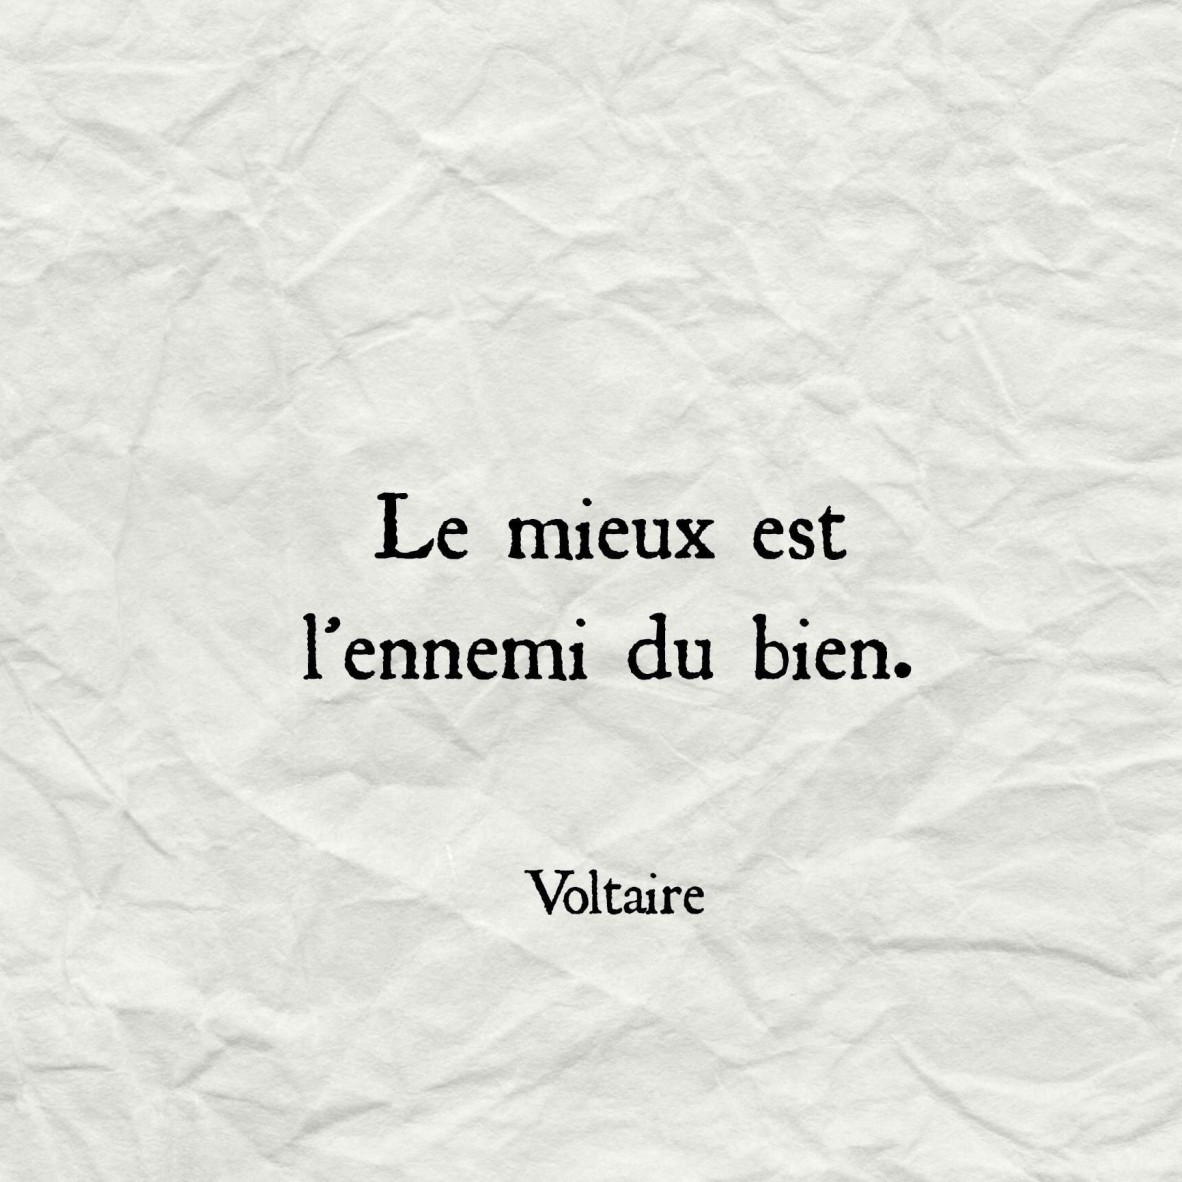 Perfect is the enemy of good - Voltaire in French as Le mieux est lennemi du bien